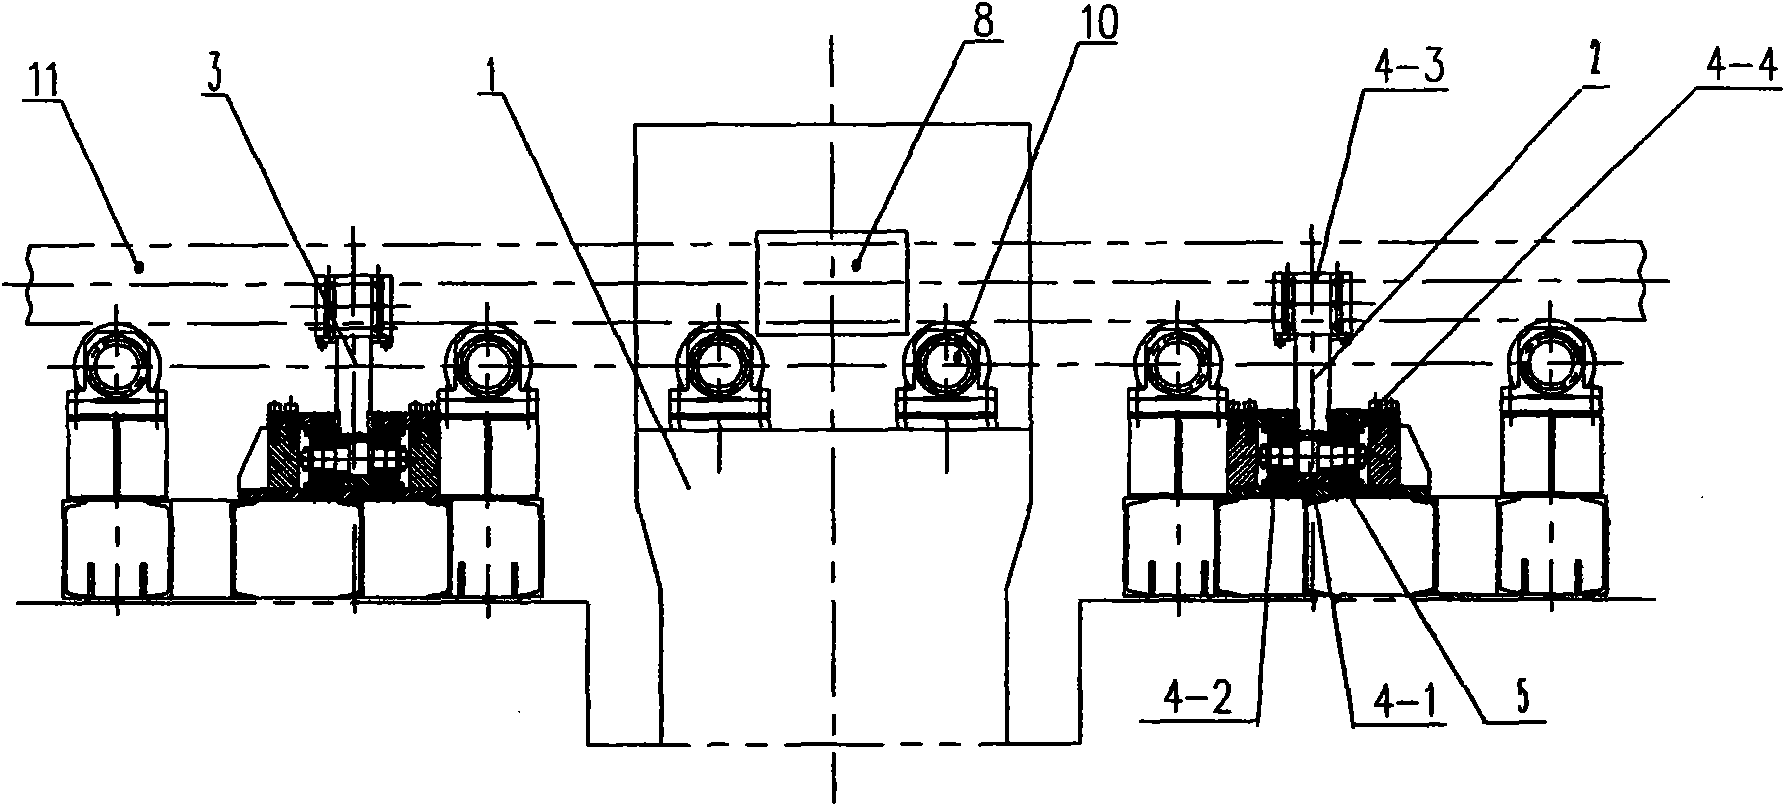 Rotating mechanism for tubes and bars on horizontal straightening machine